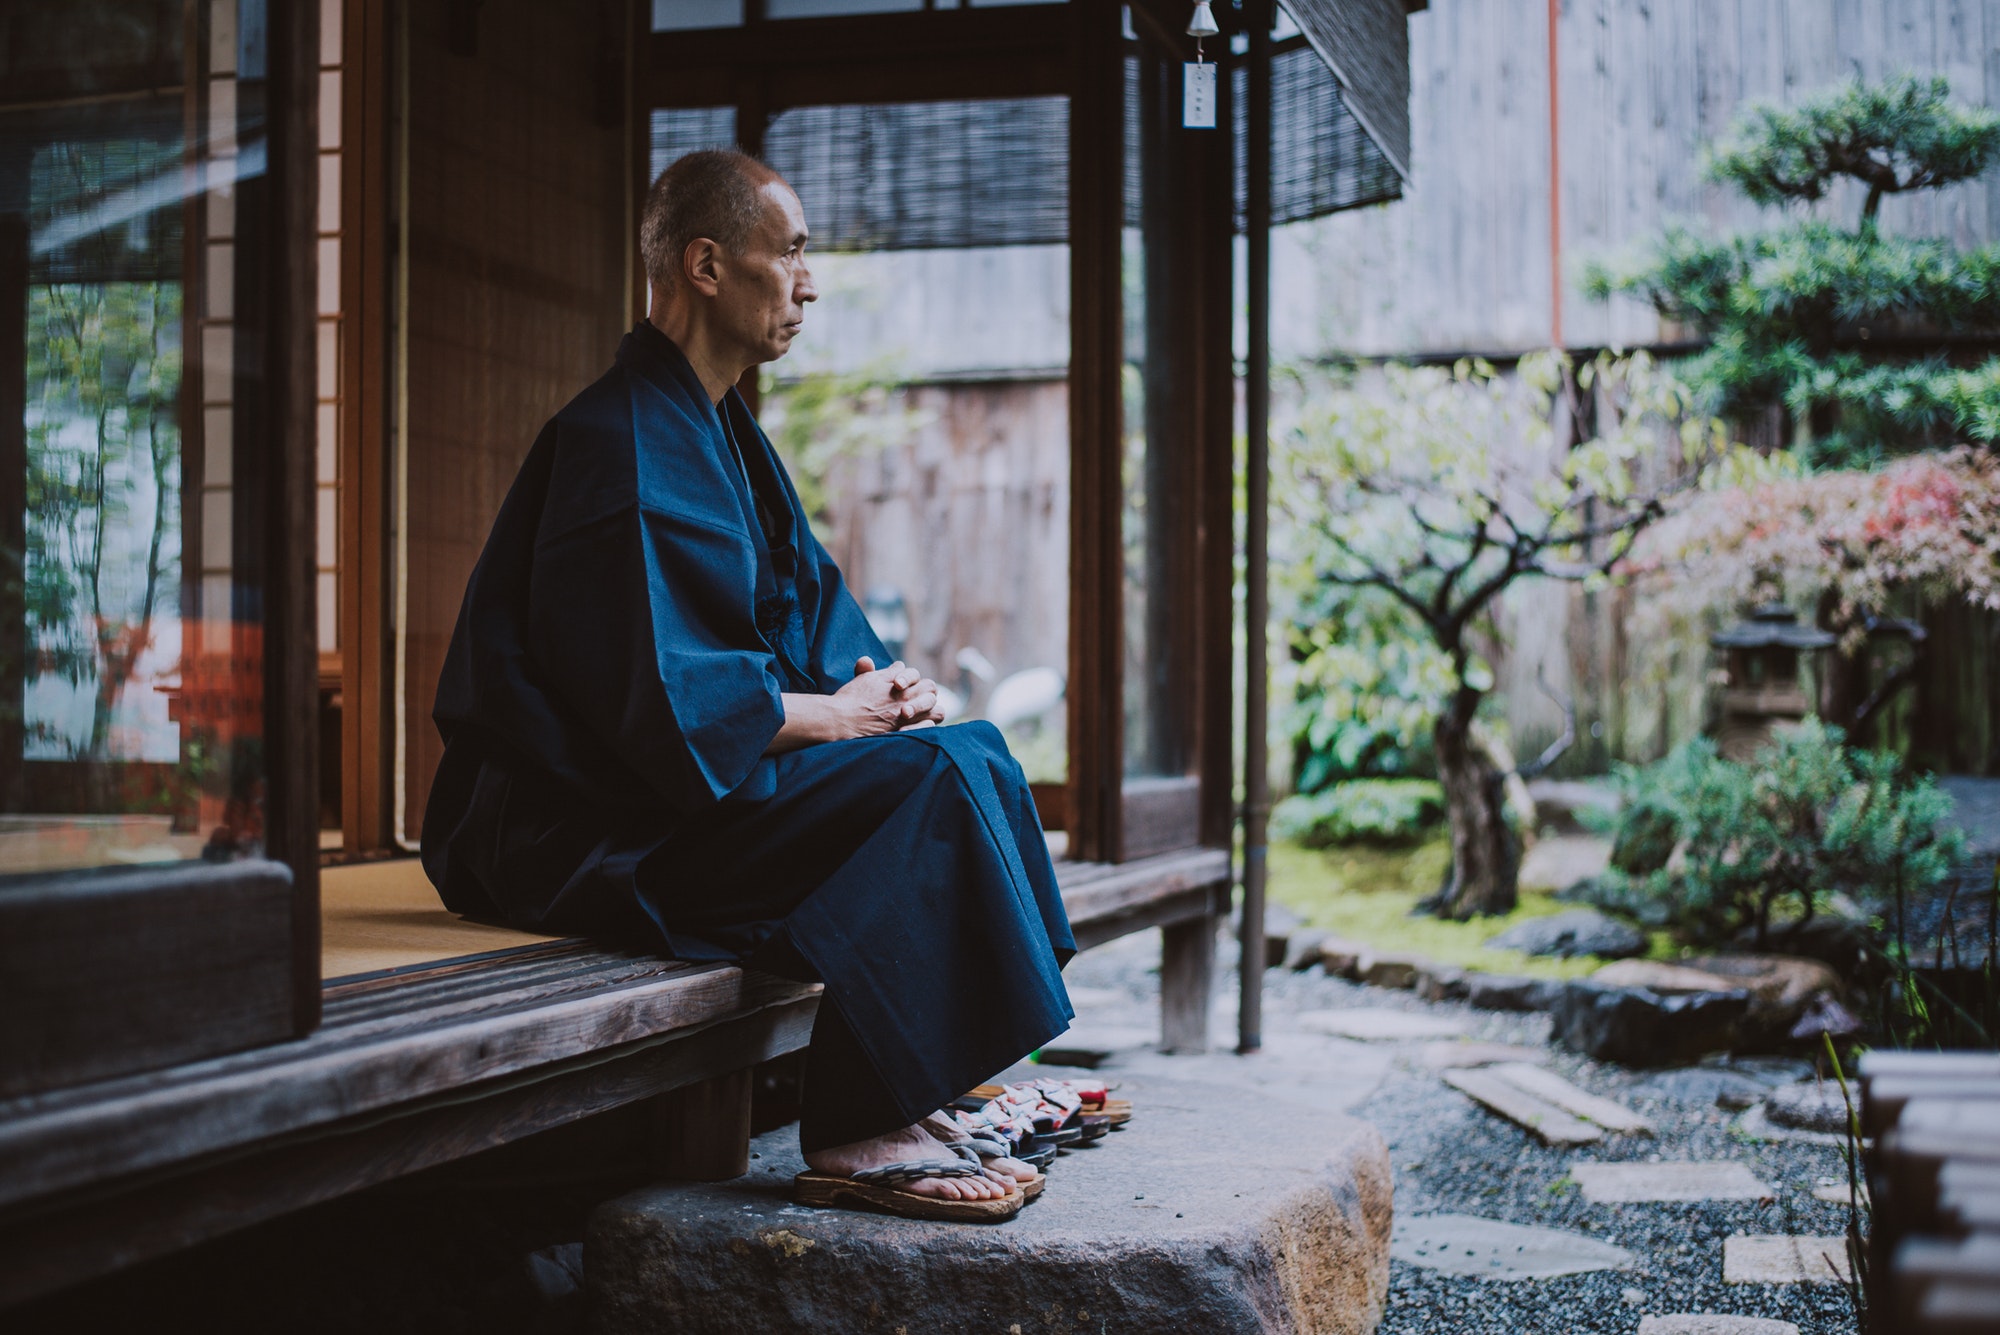 Japanese man meditating in his garden